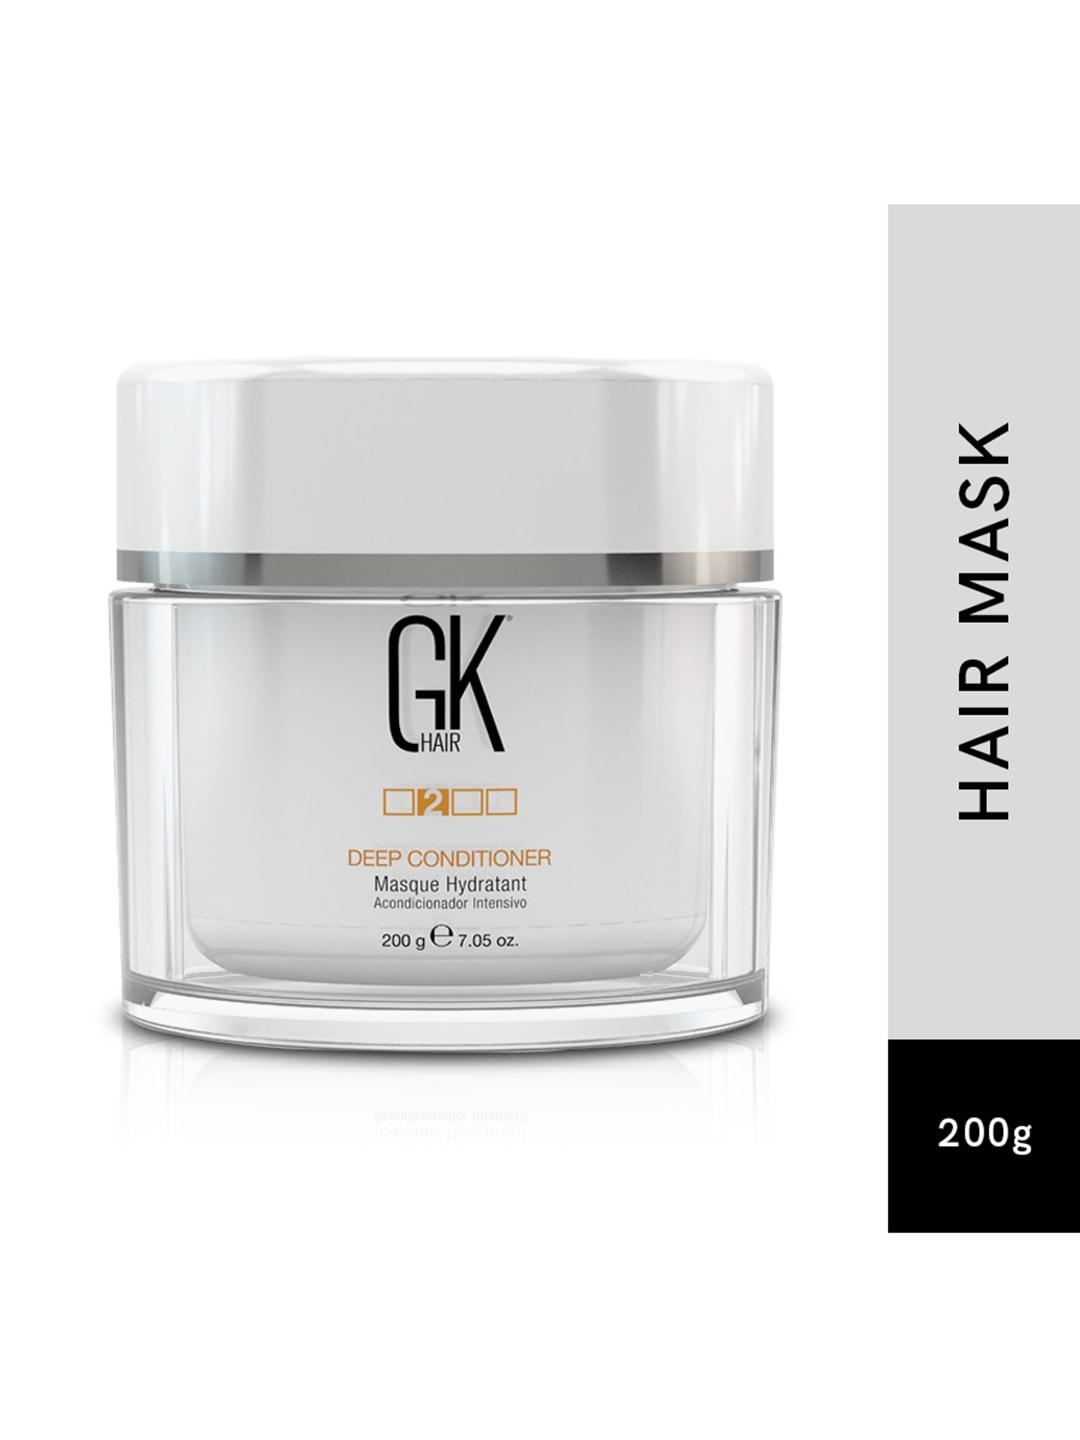 gk-hair-deep-conditioner-global-keratin-hair-masque-200g